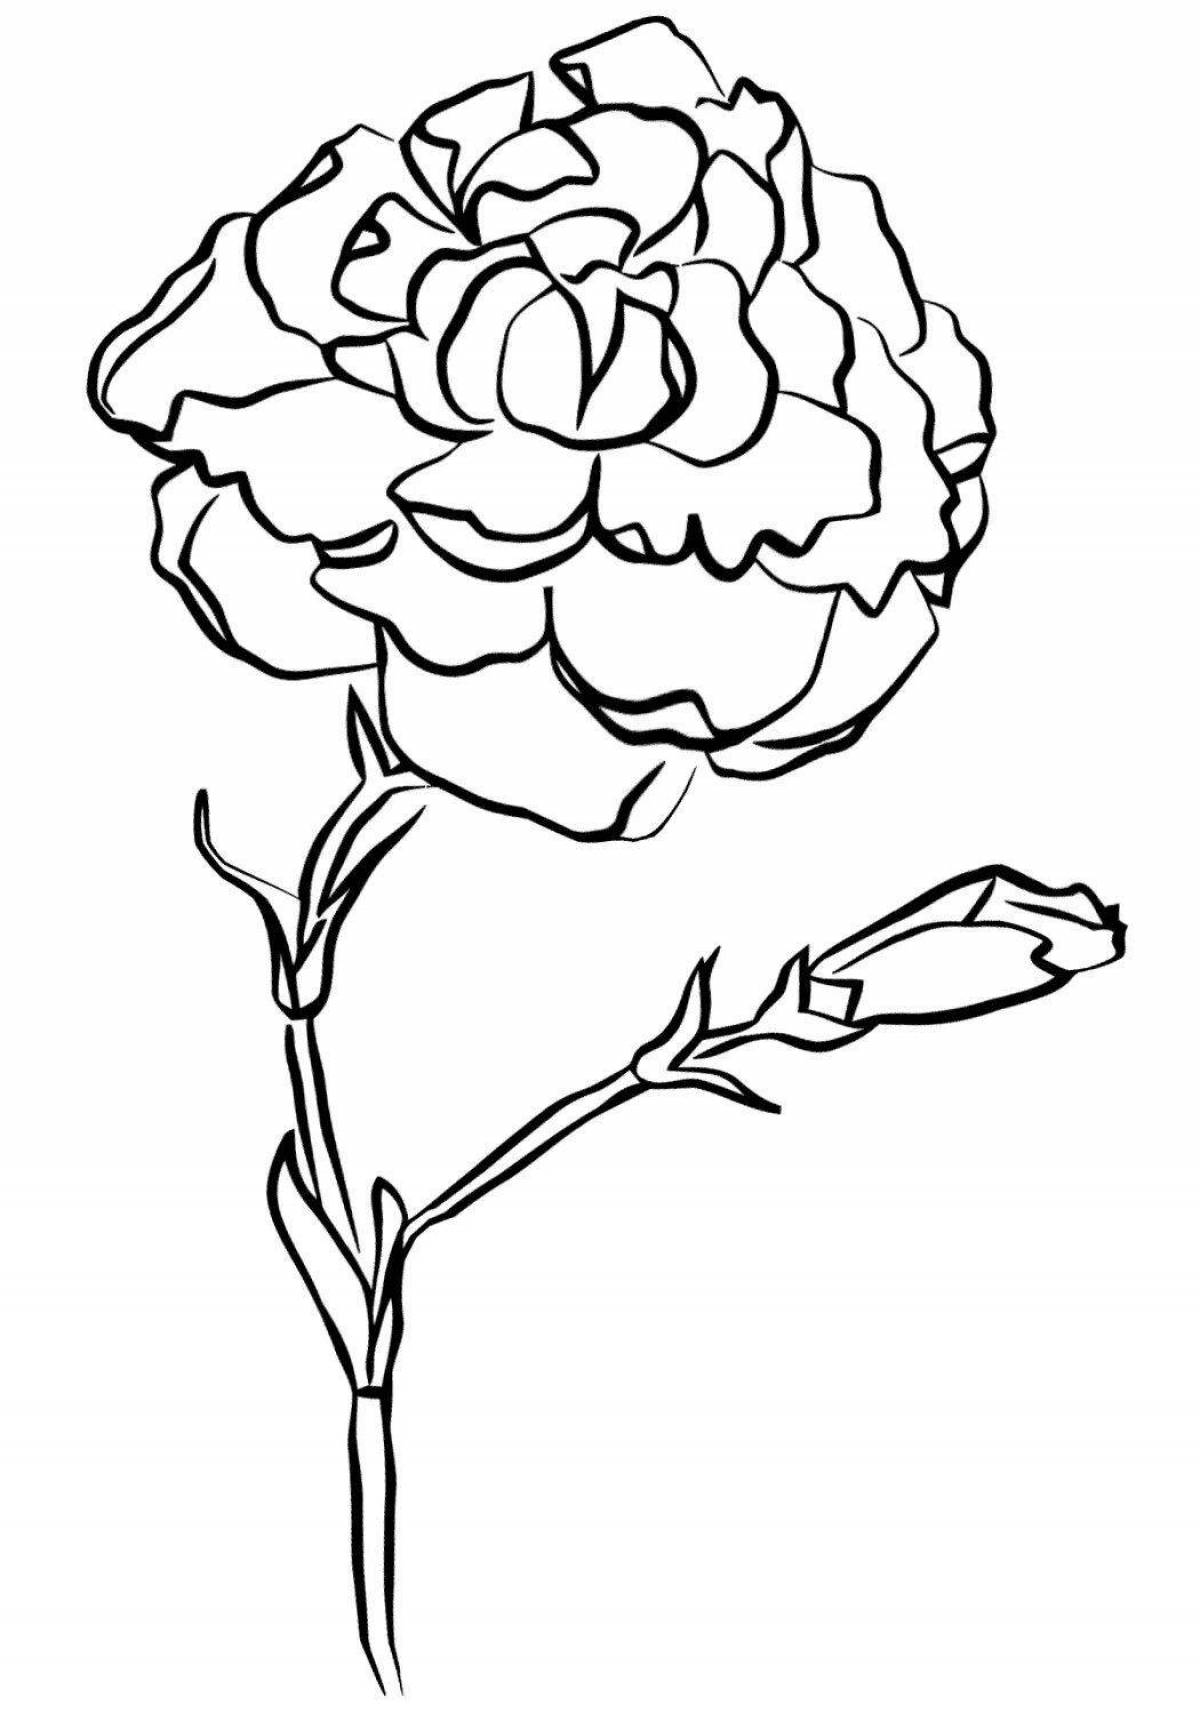 Coloring carnation pattern serendipitous